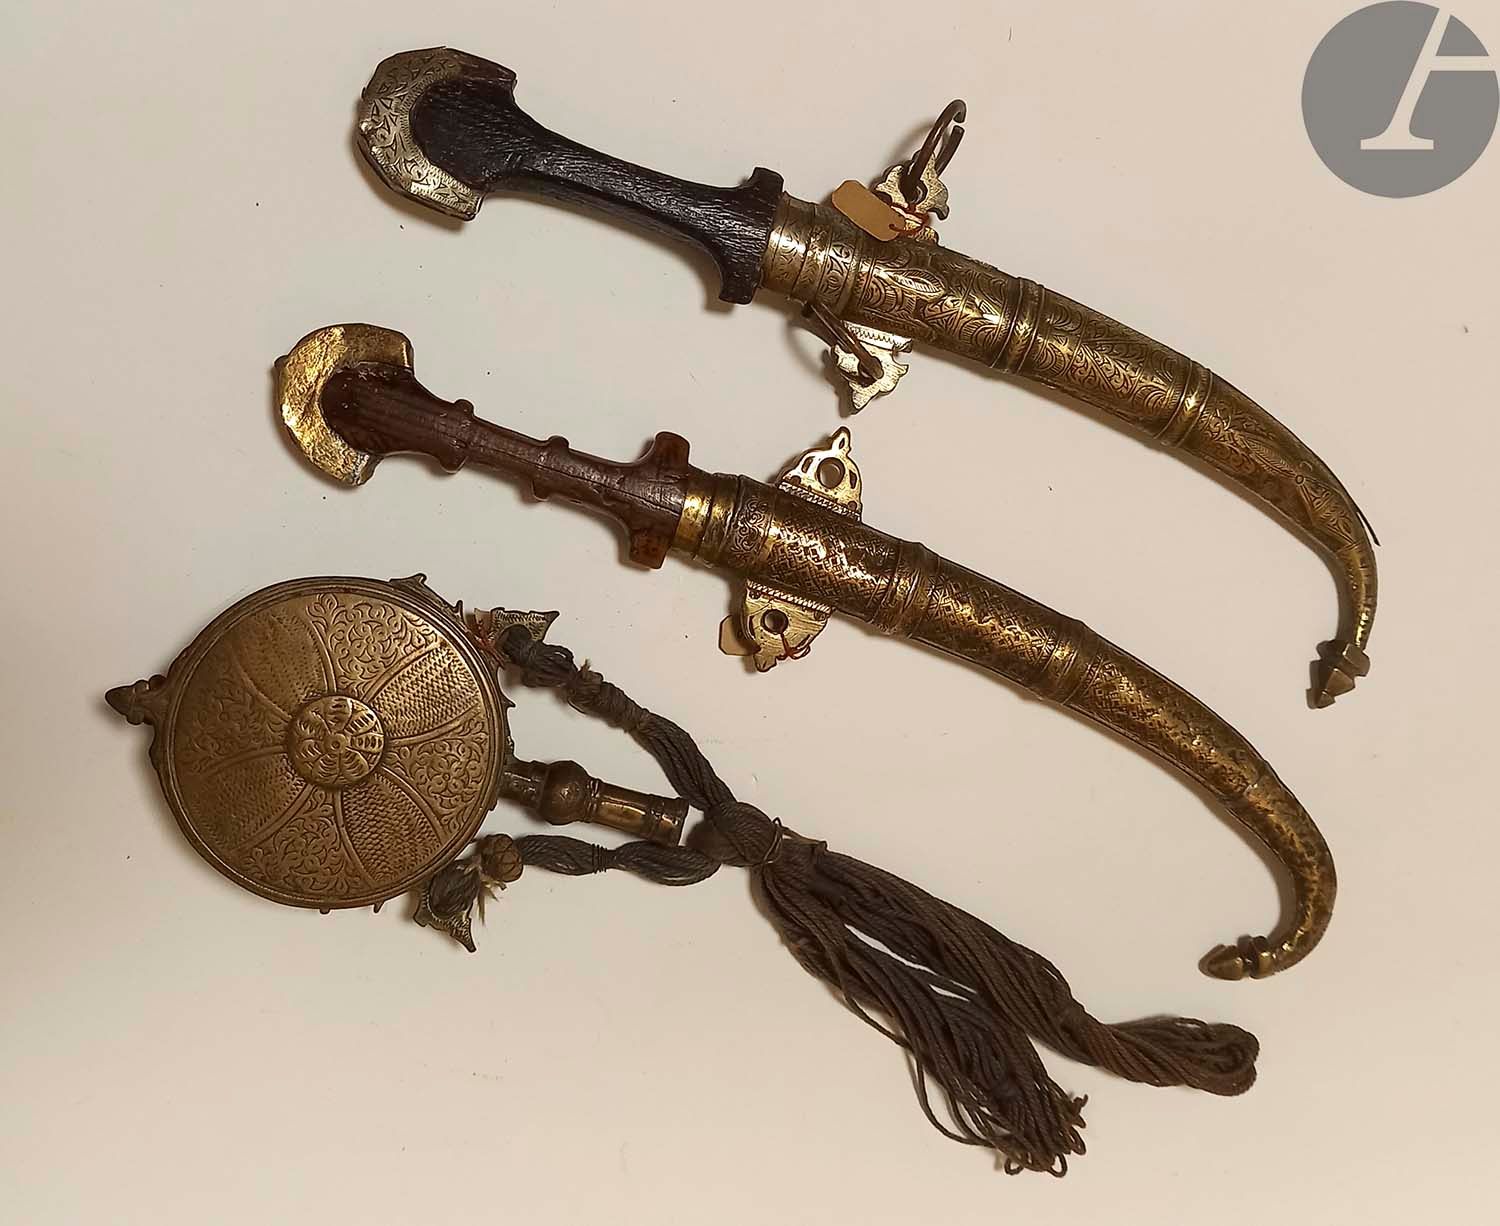 Null 套装包括 :
- 两把Koumyah匕首。木制手柄。铜制刀鞘。
- 圆形铜质火药瓶。有线条。
A.B.E.